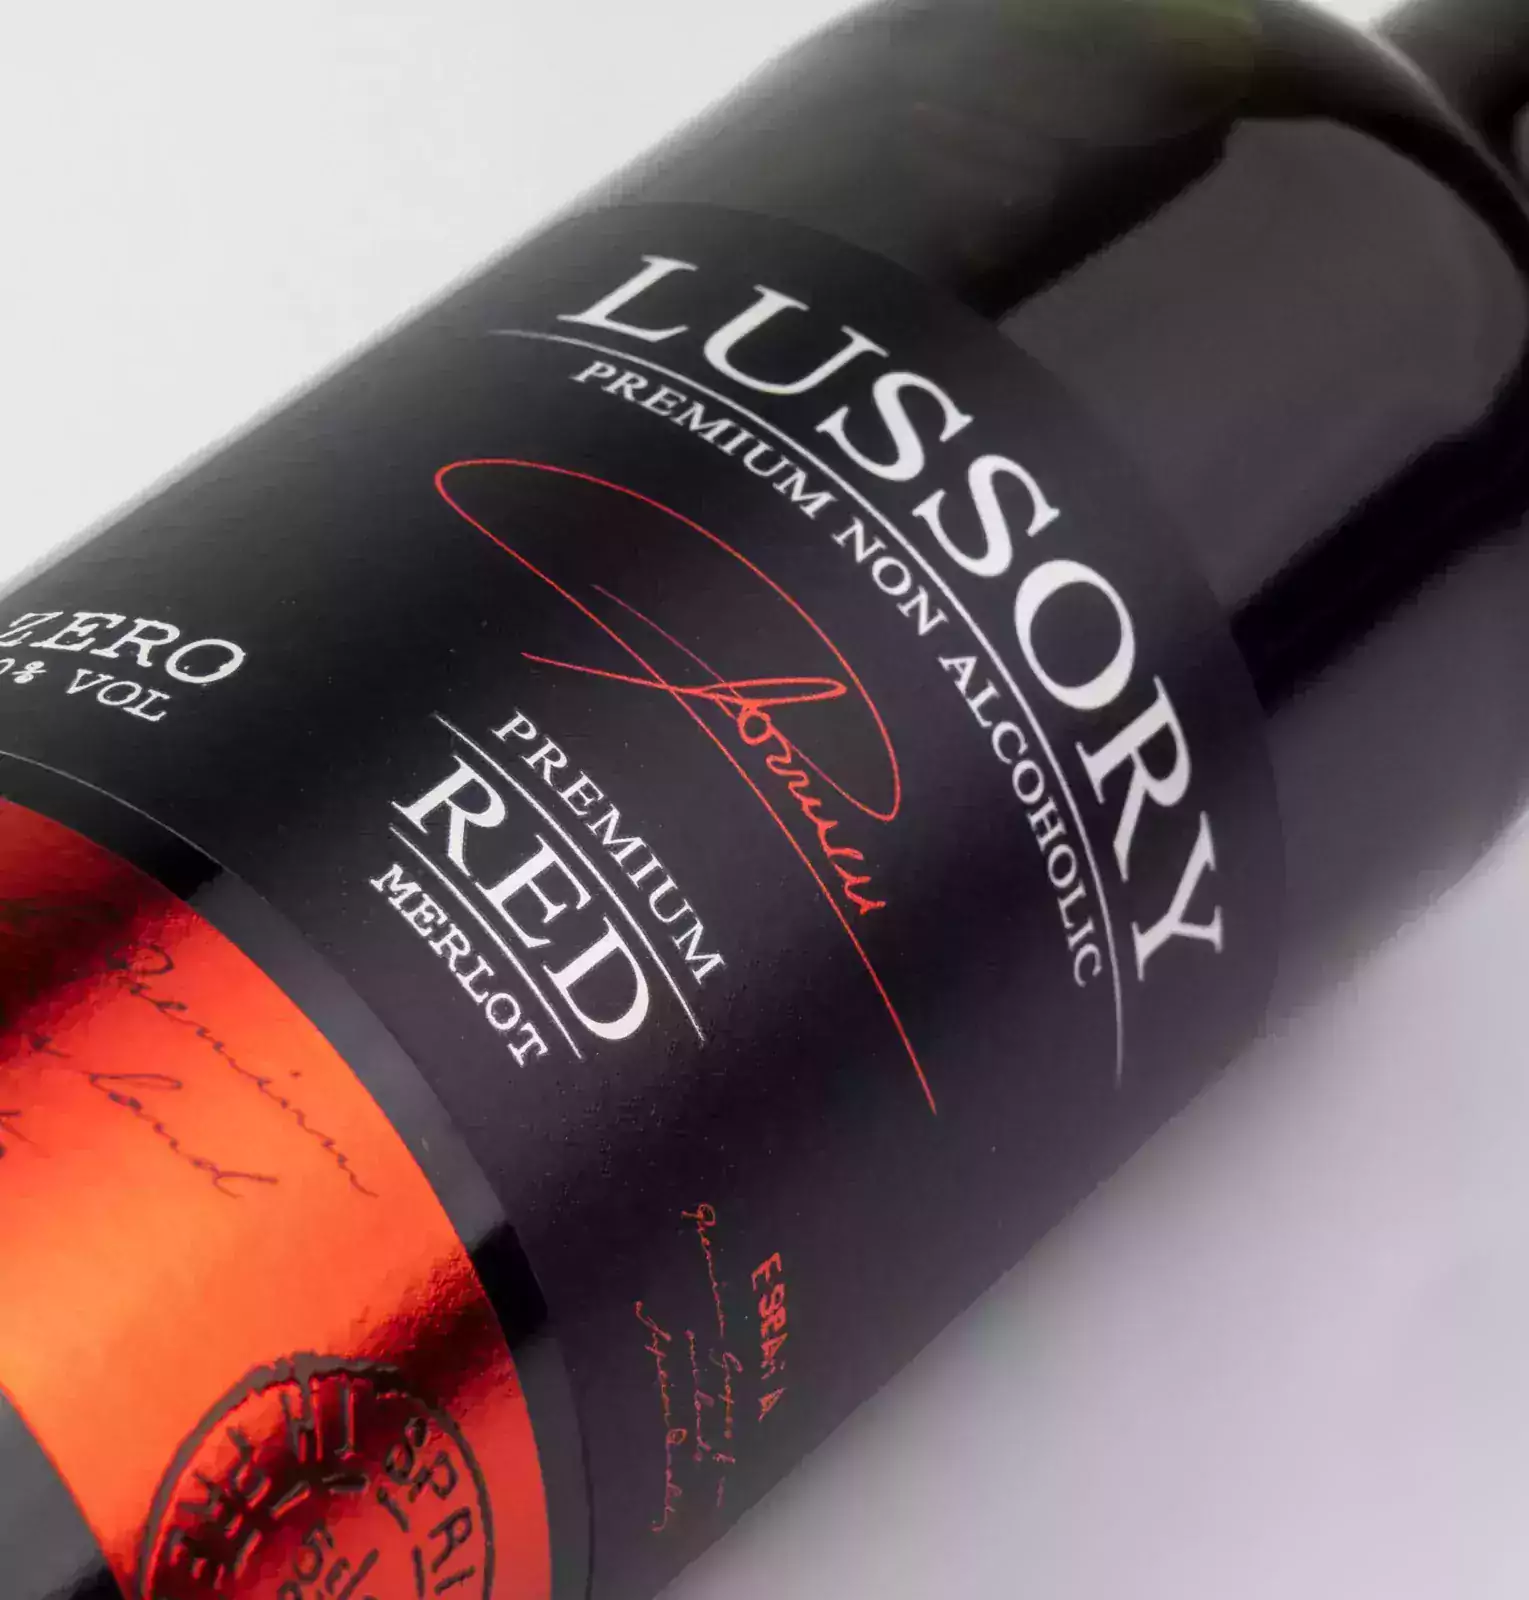 lussory-wine-8-scaled-jpg